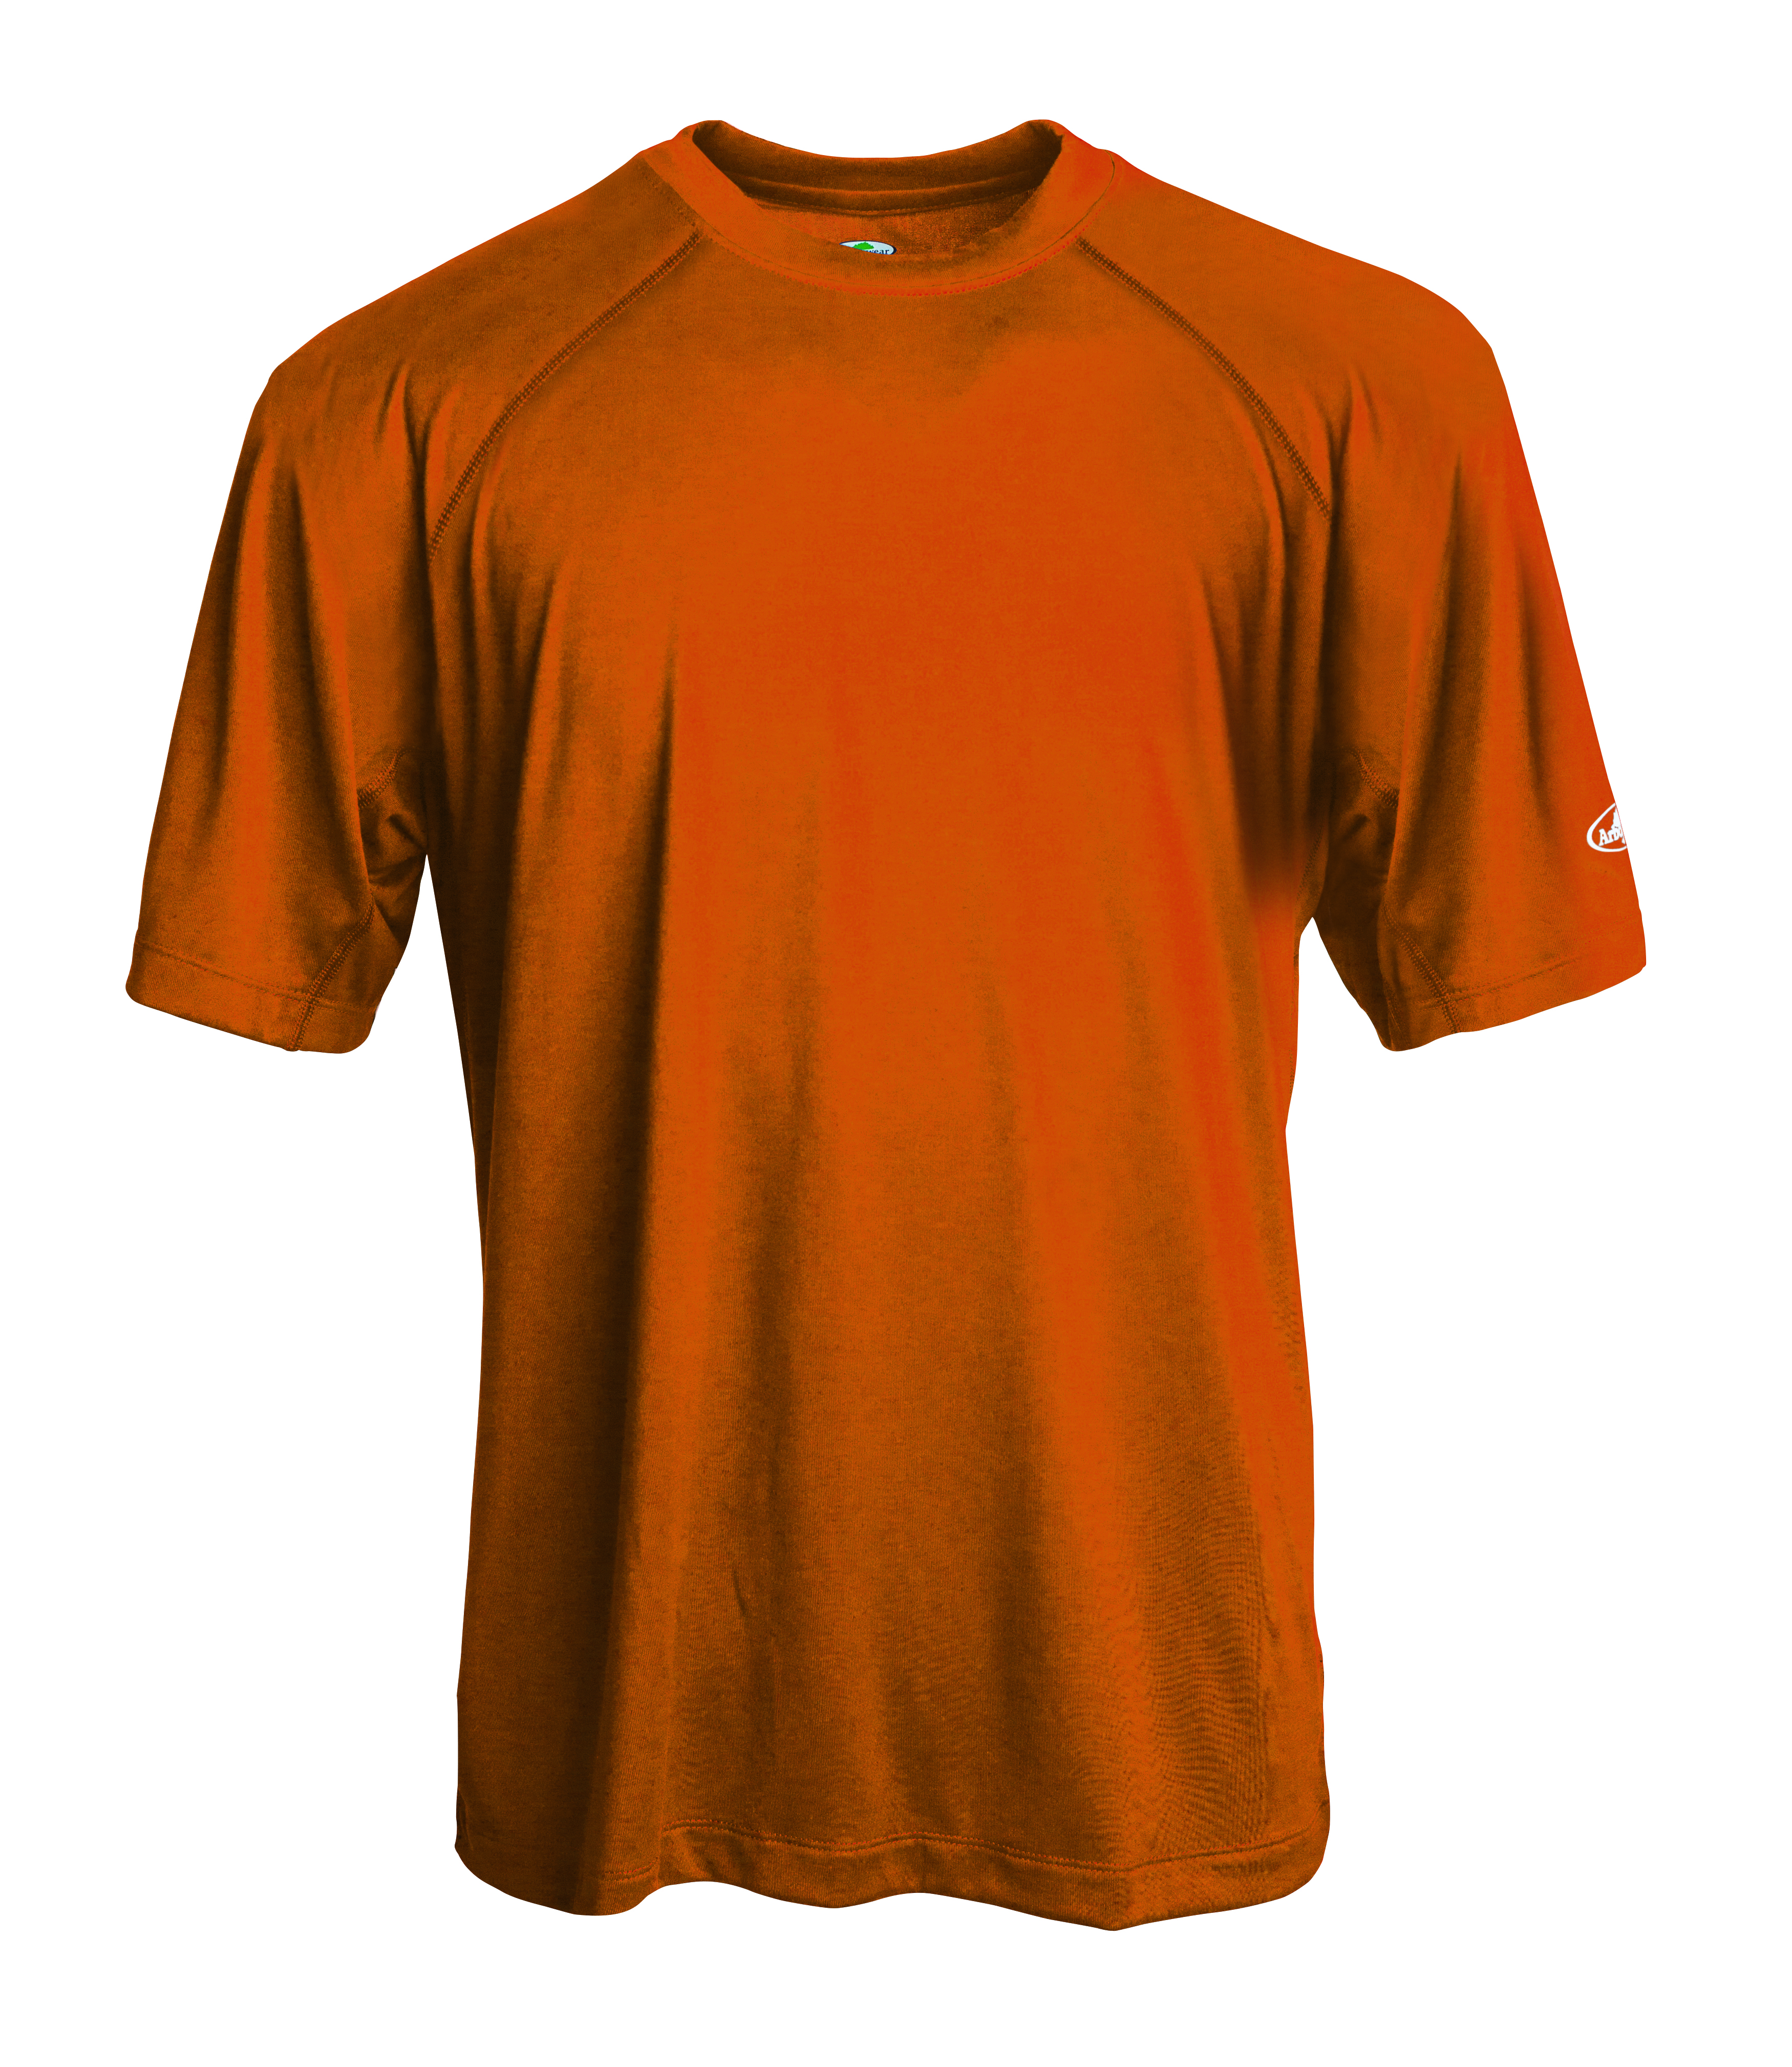 Men's Arborwear Transpiration T-Shirt (Short Sleeve) with GEO cool